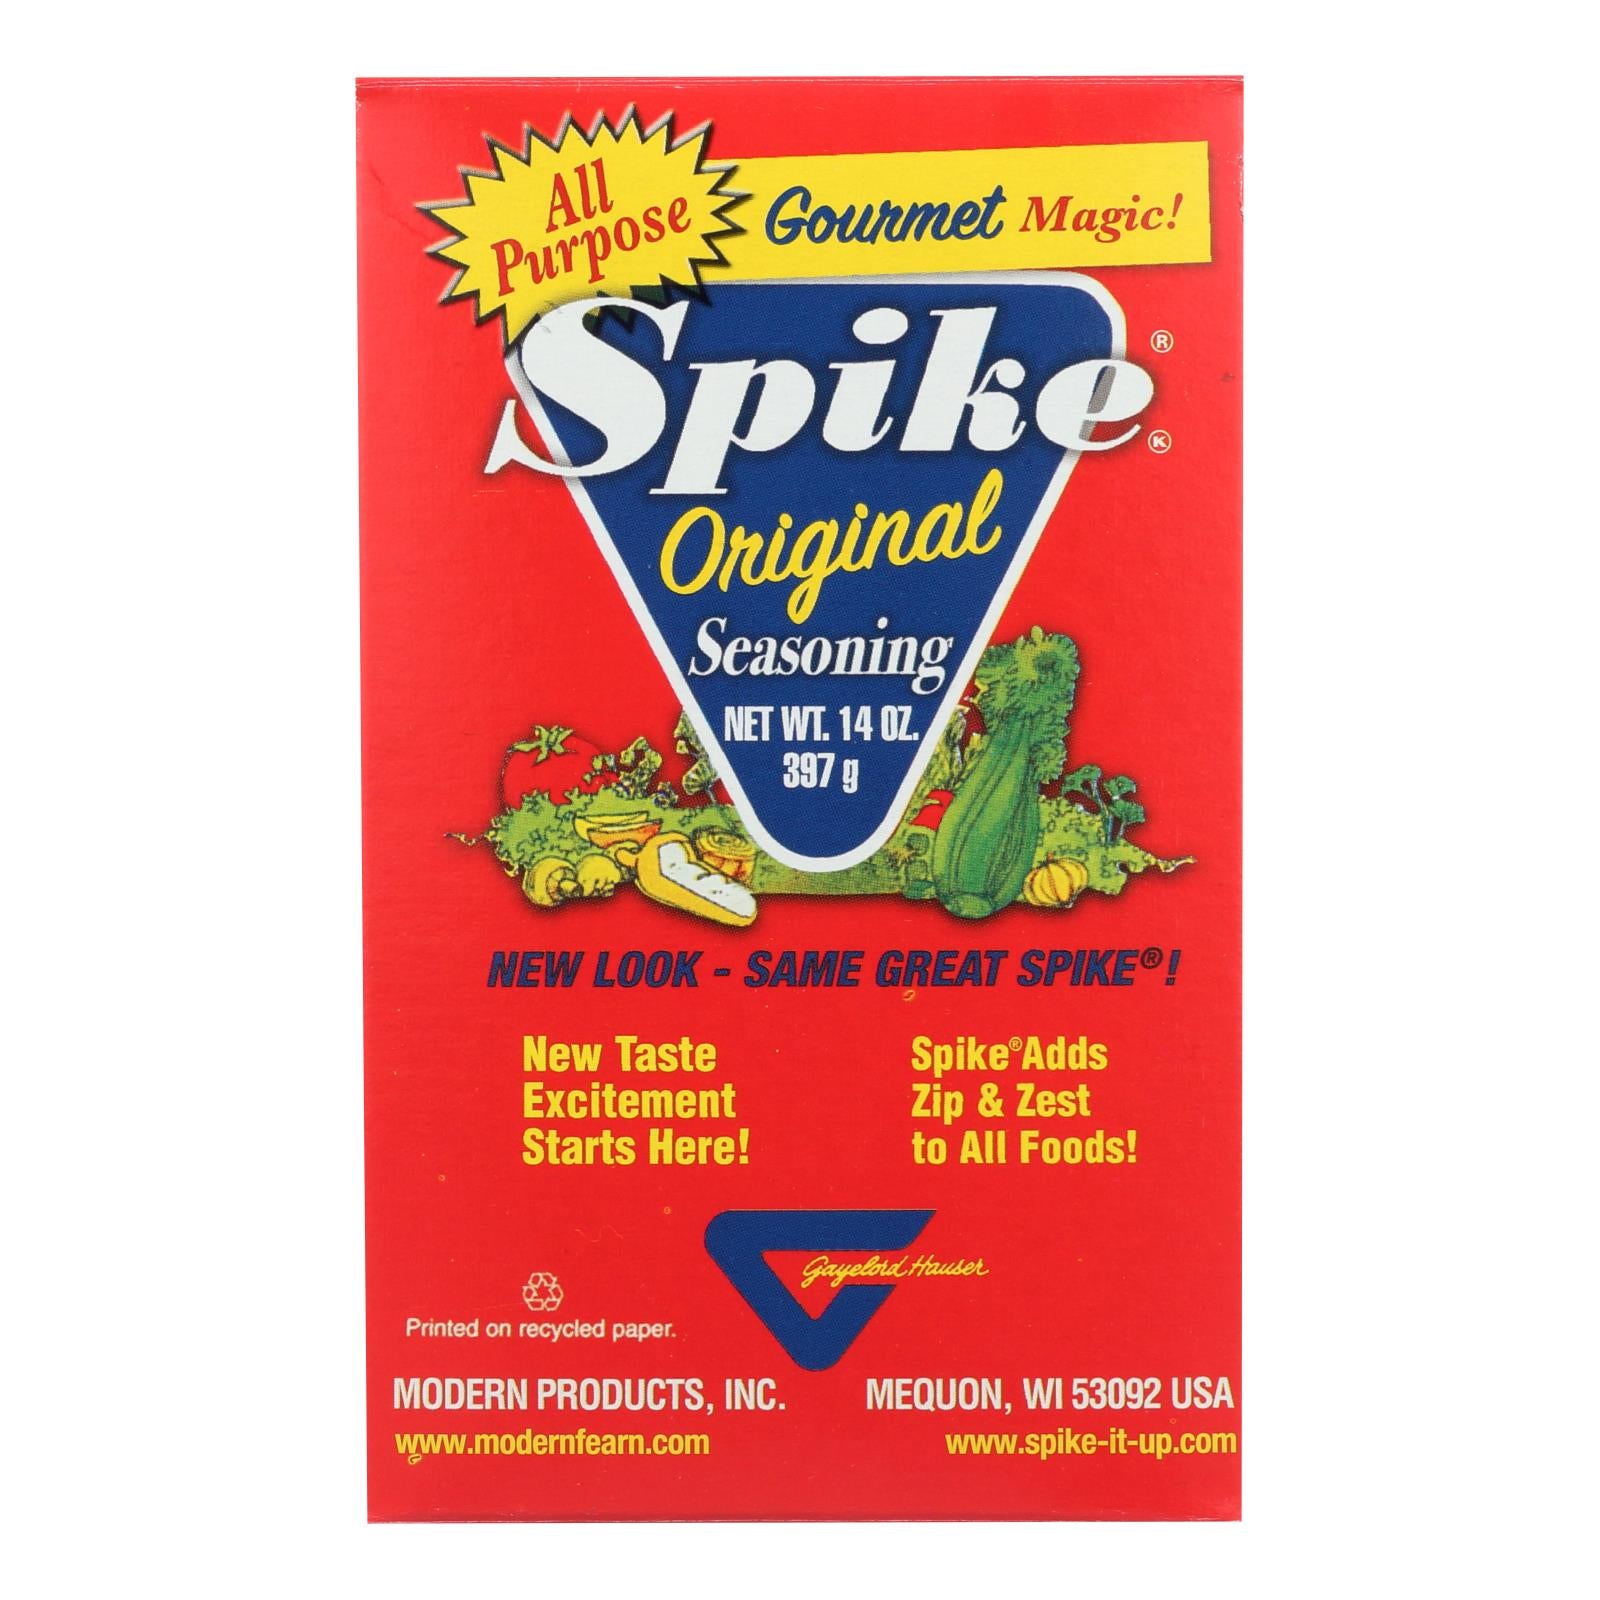 Modern Products Spike Gourmet Natural Seasoning - Original Magic - Box - 14 Oz - Whole Green Foods